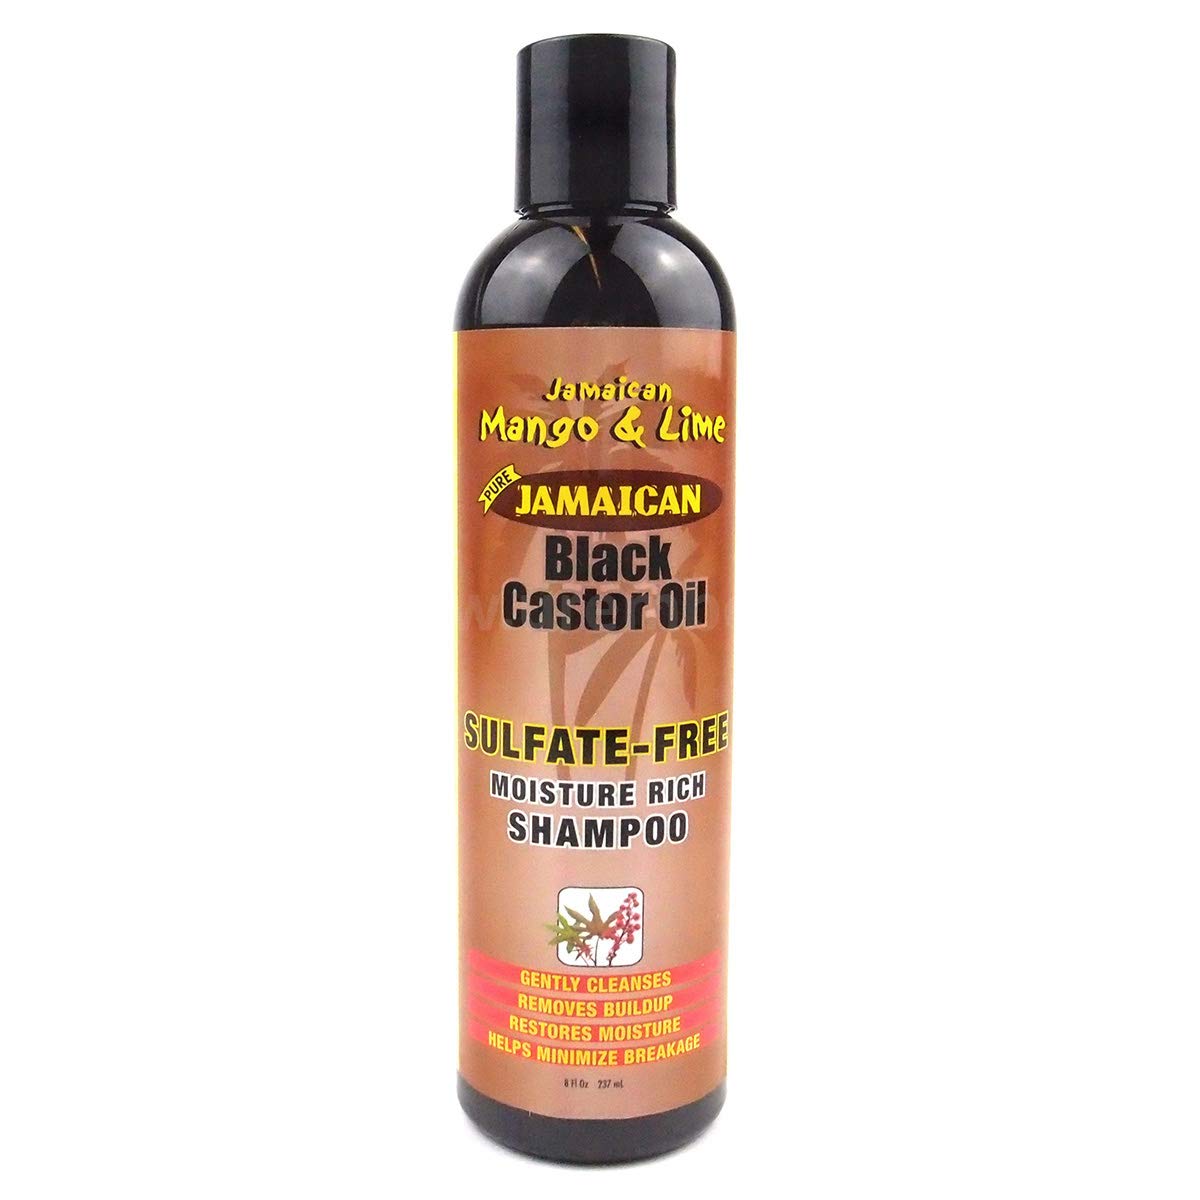 Jamaican Mango Lime Black Castor Oil Shampoo